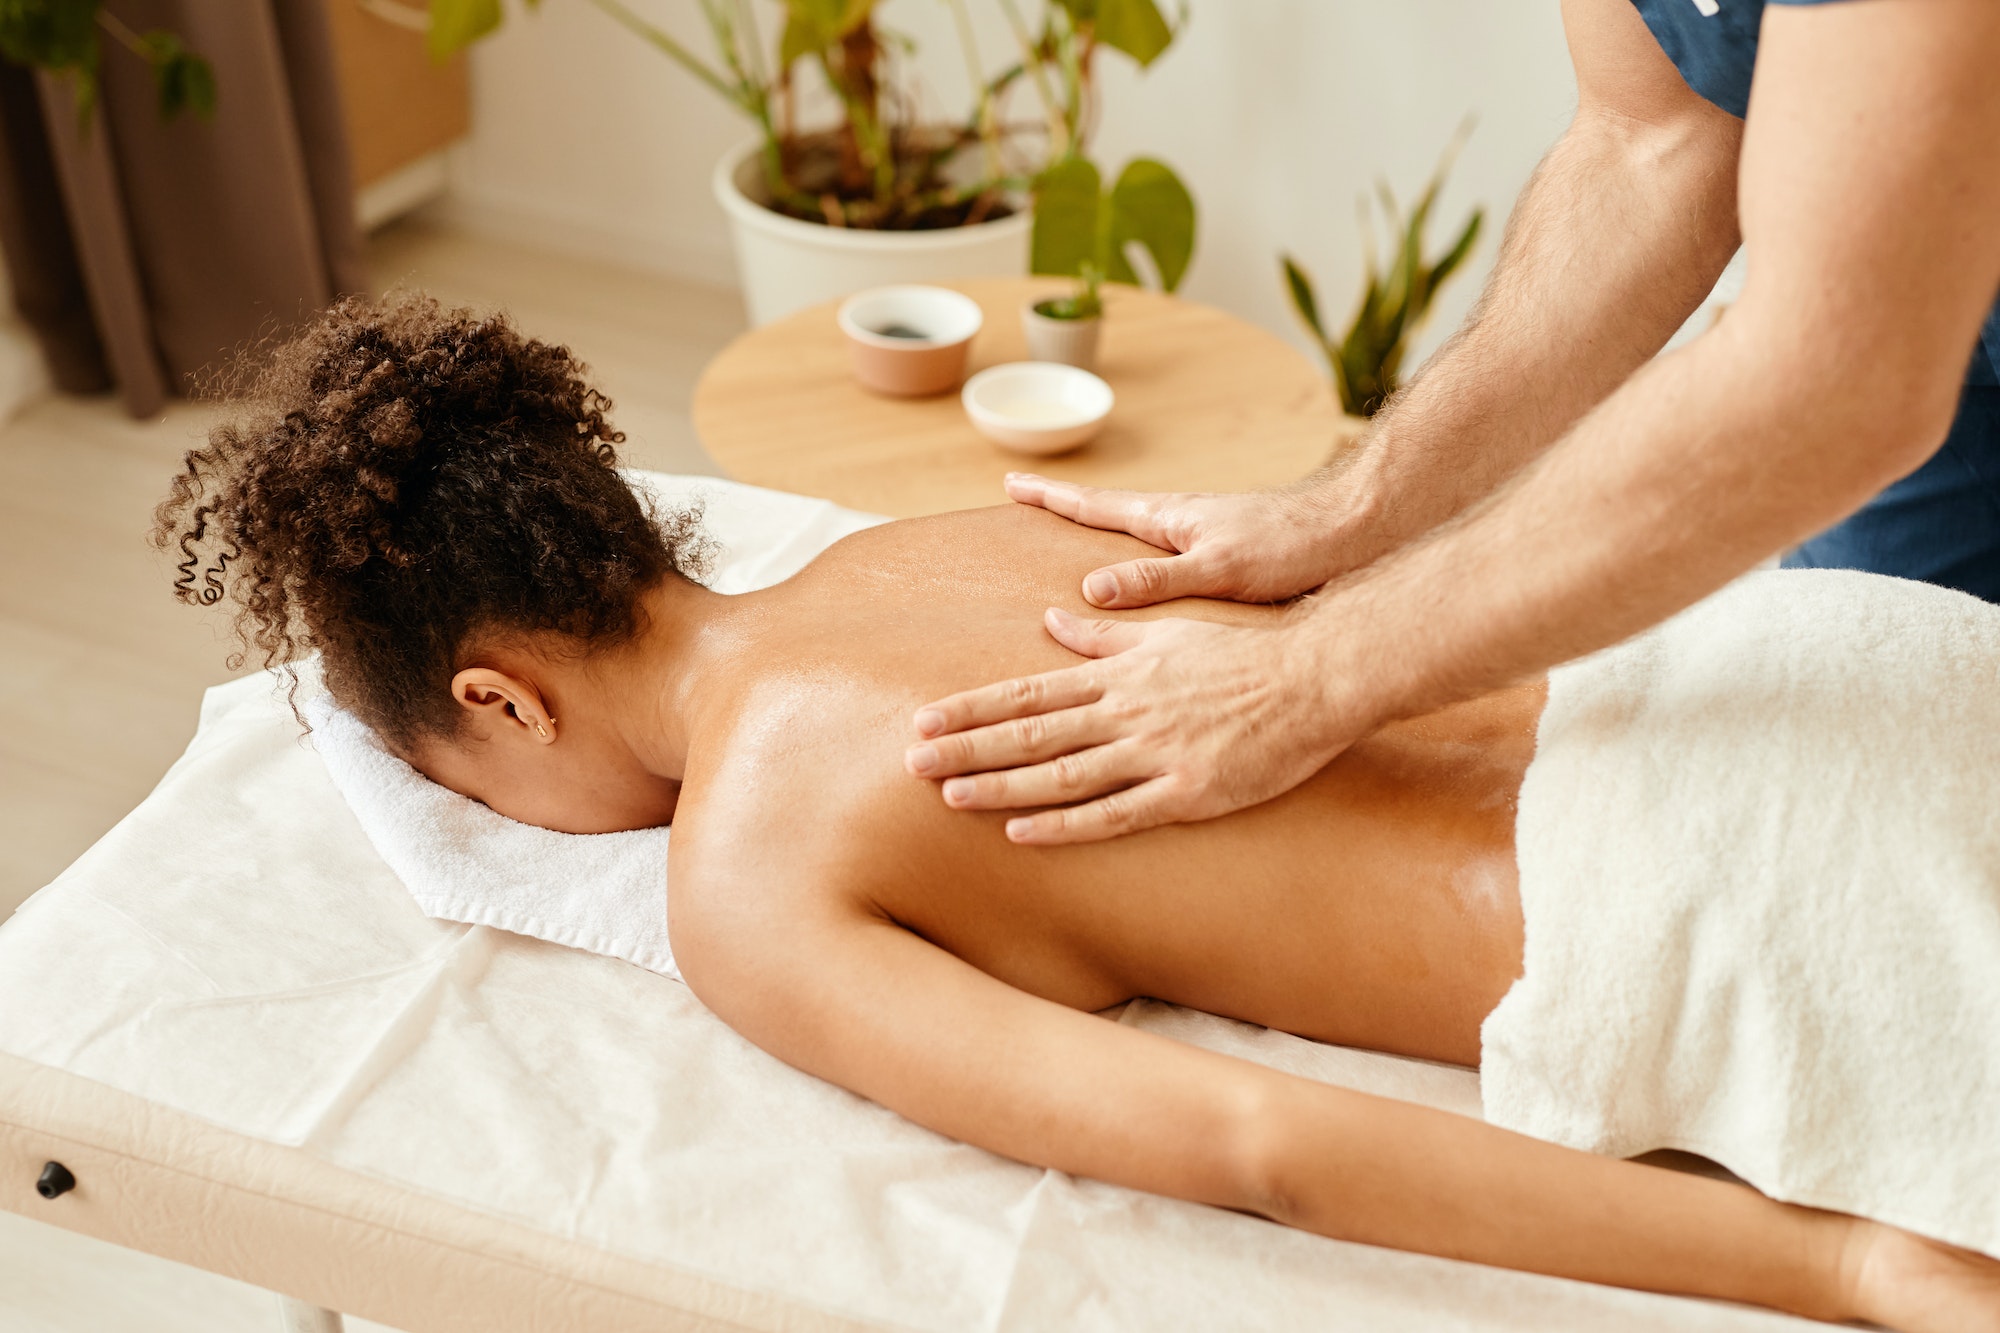 massage-session-in-spa.jpg